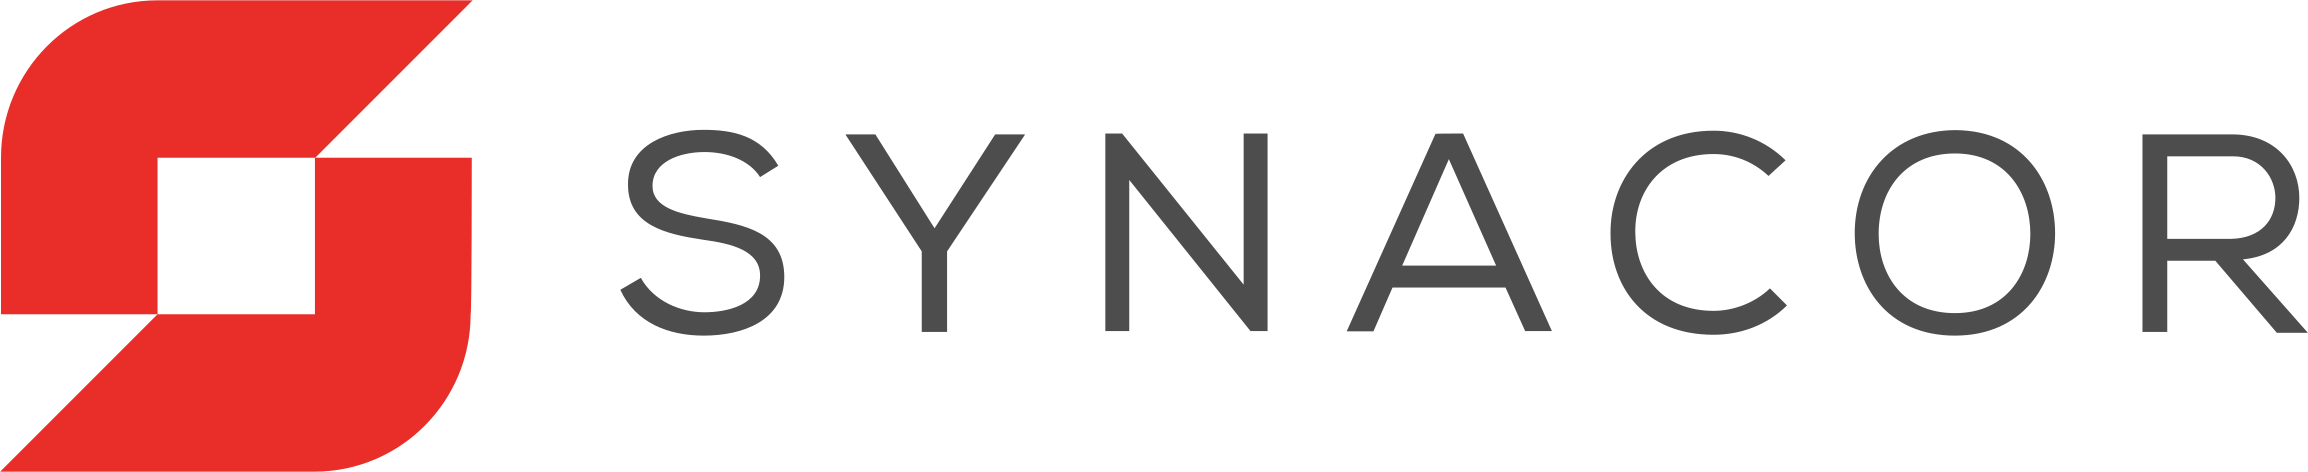 Synacor Logo Cropped Transparent Background